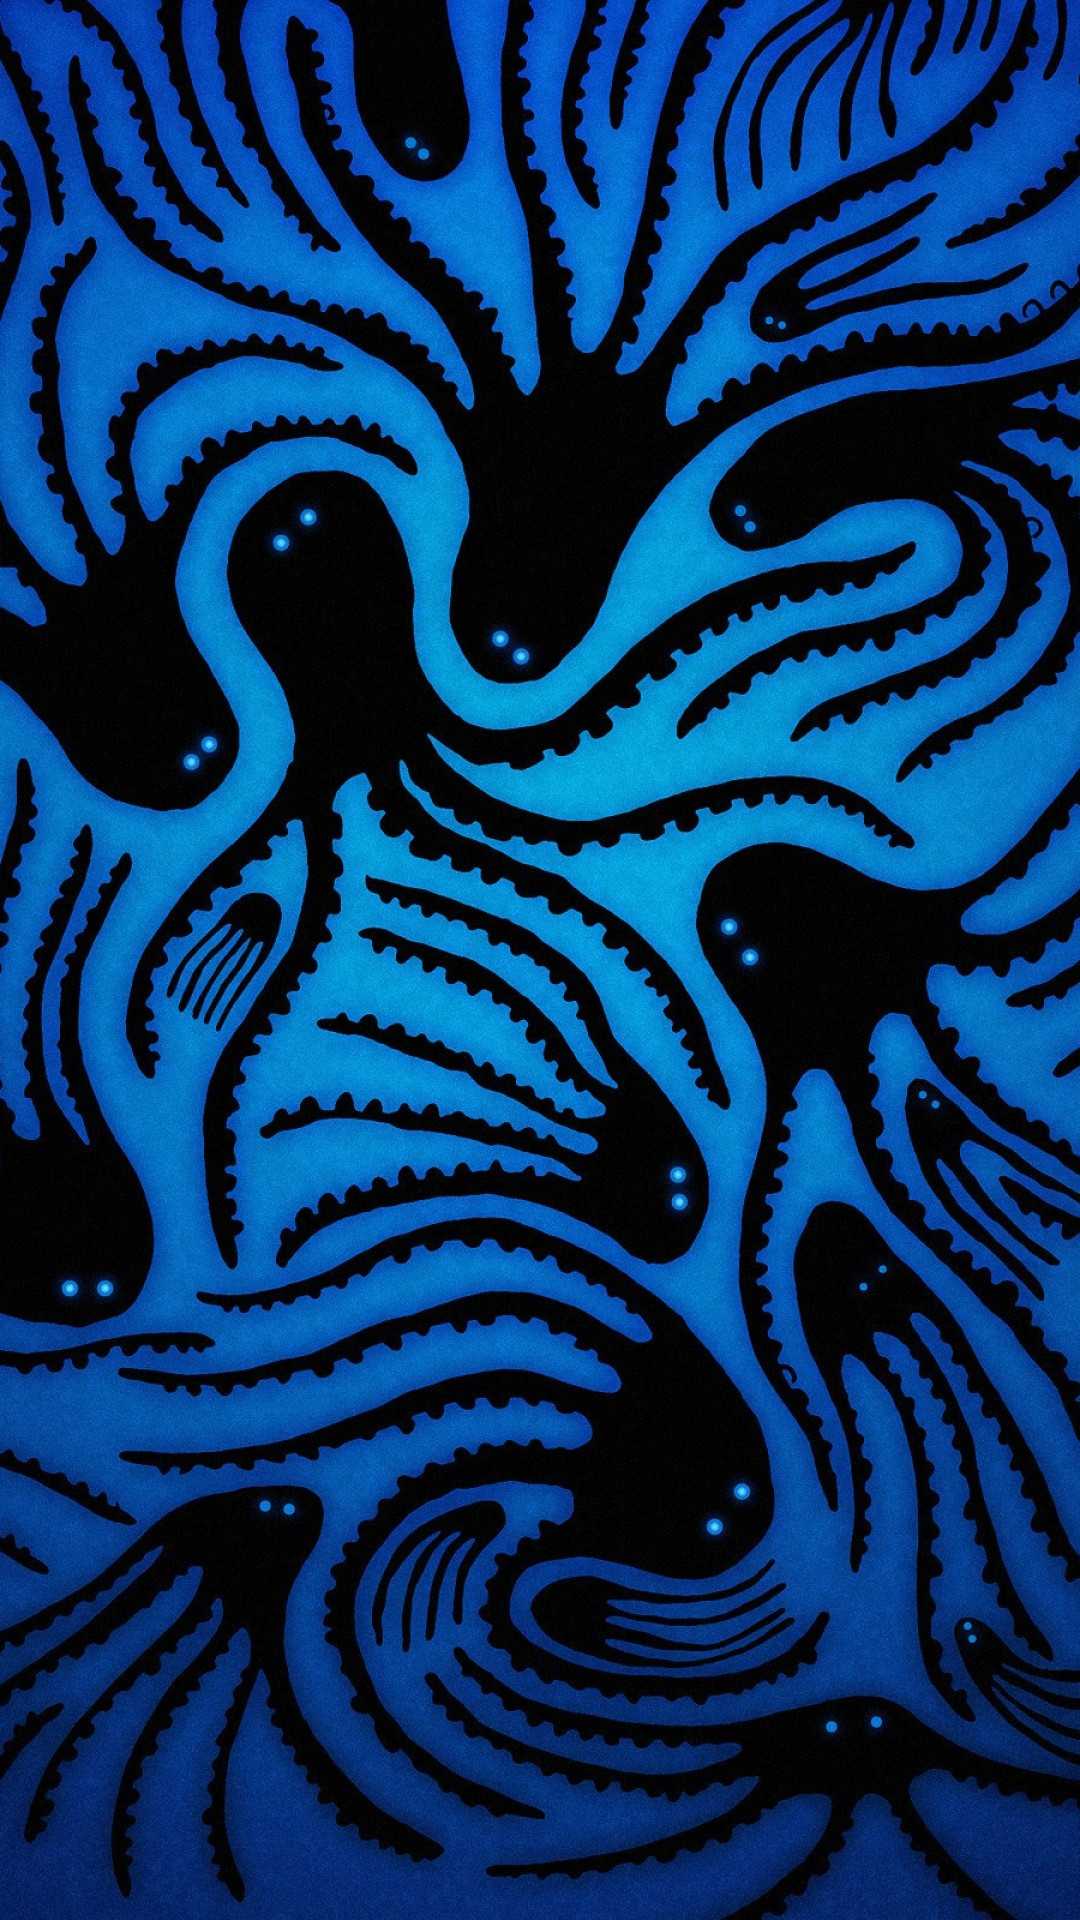 1080p Octopus Wallpaper 1